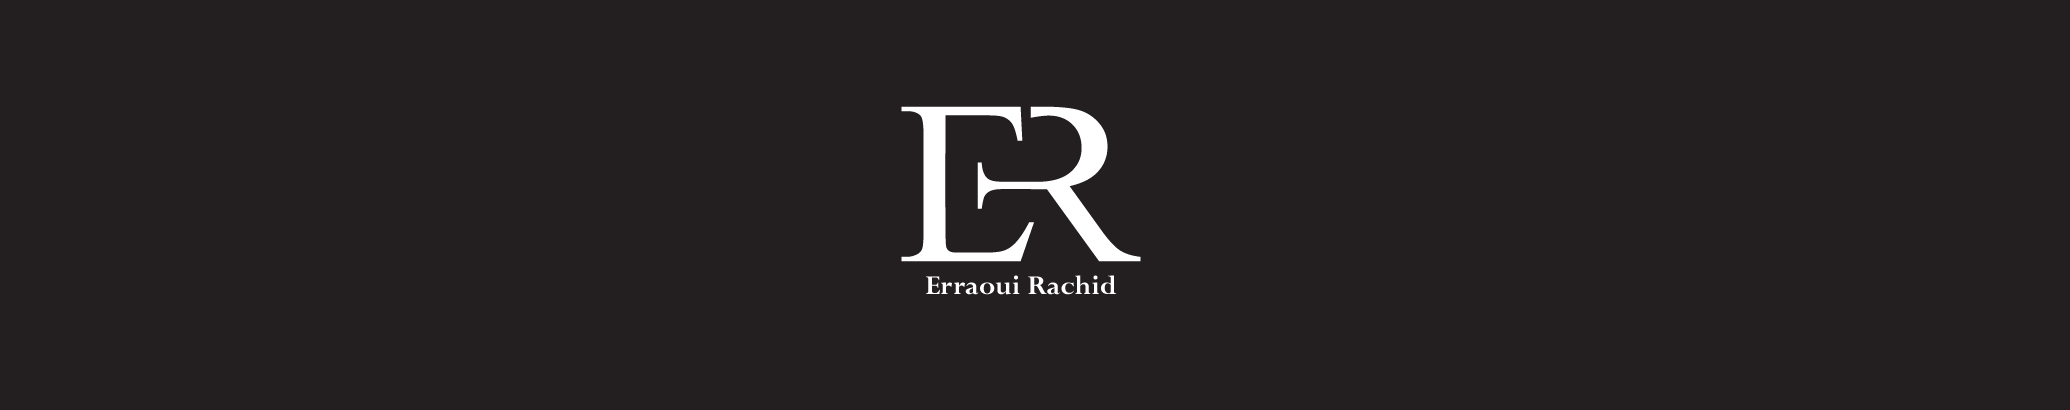 Profielbanner van Rachid ERRAOUI